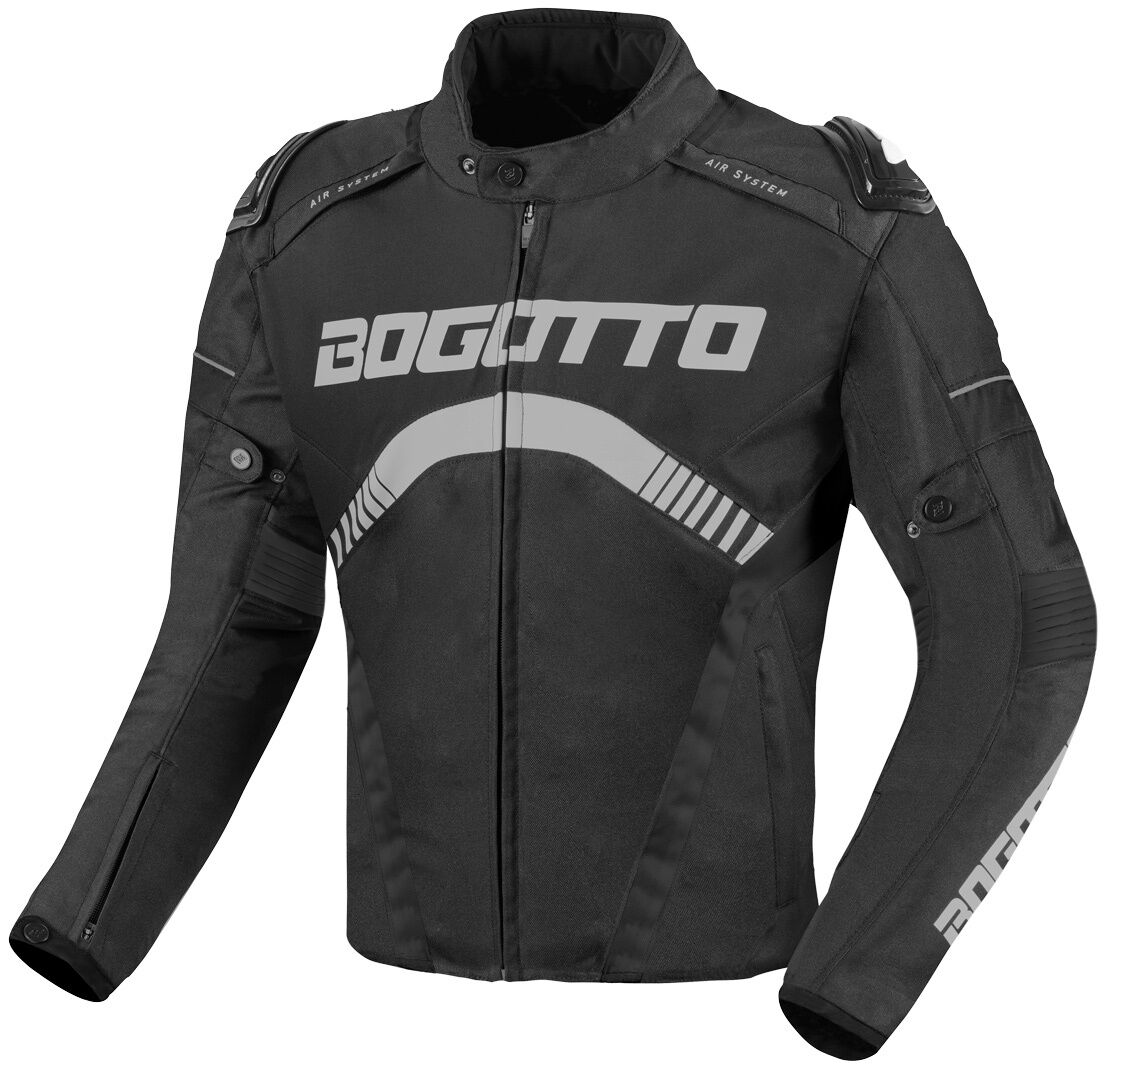 Bogotto Boomerang Chaqueta textil impermeable para motocicleta - Negro Gris (M)